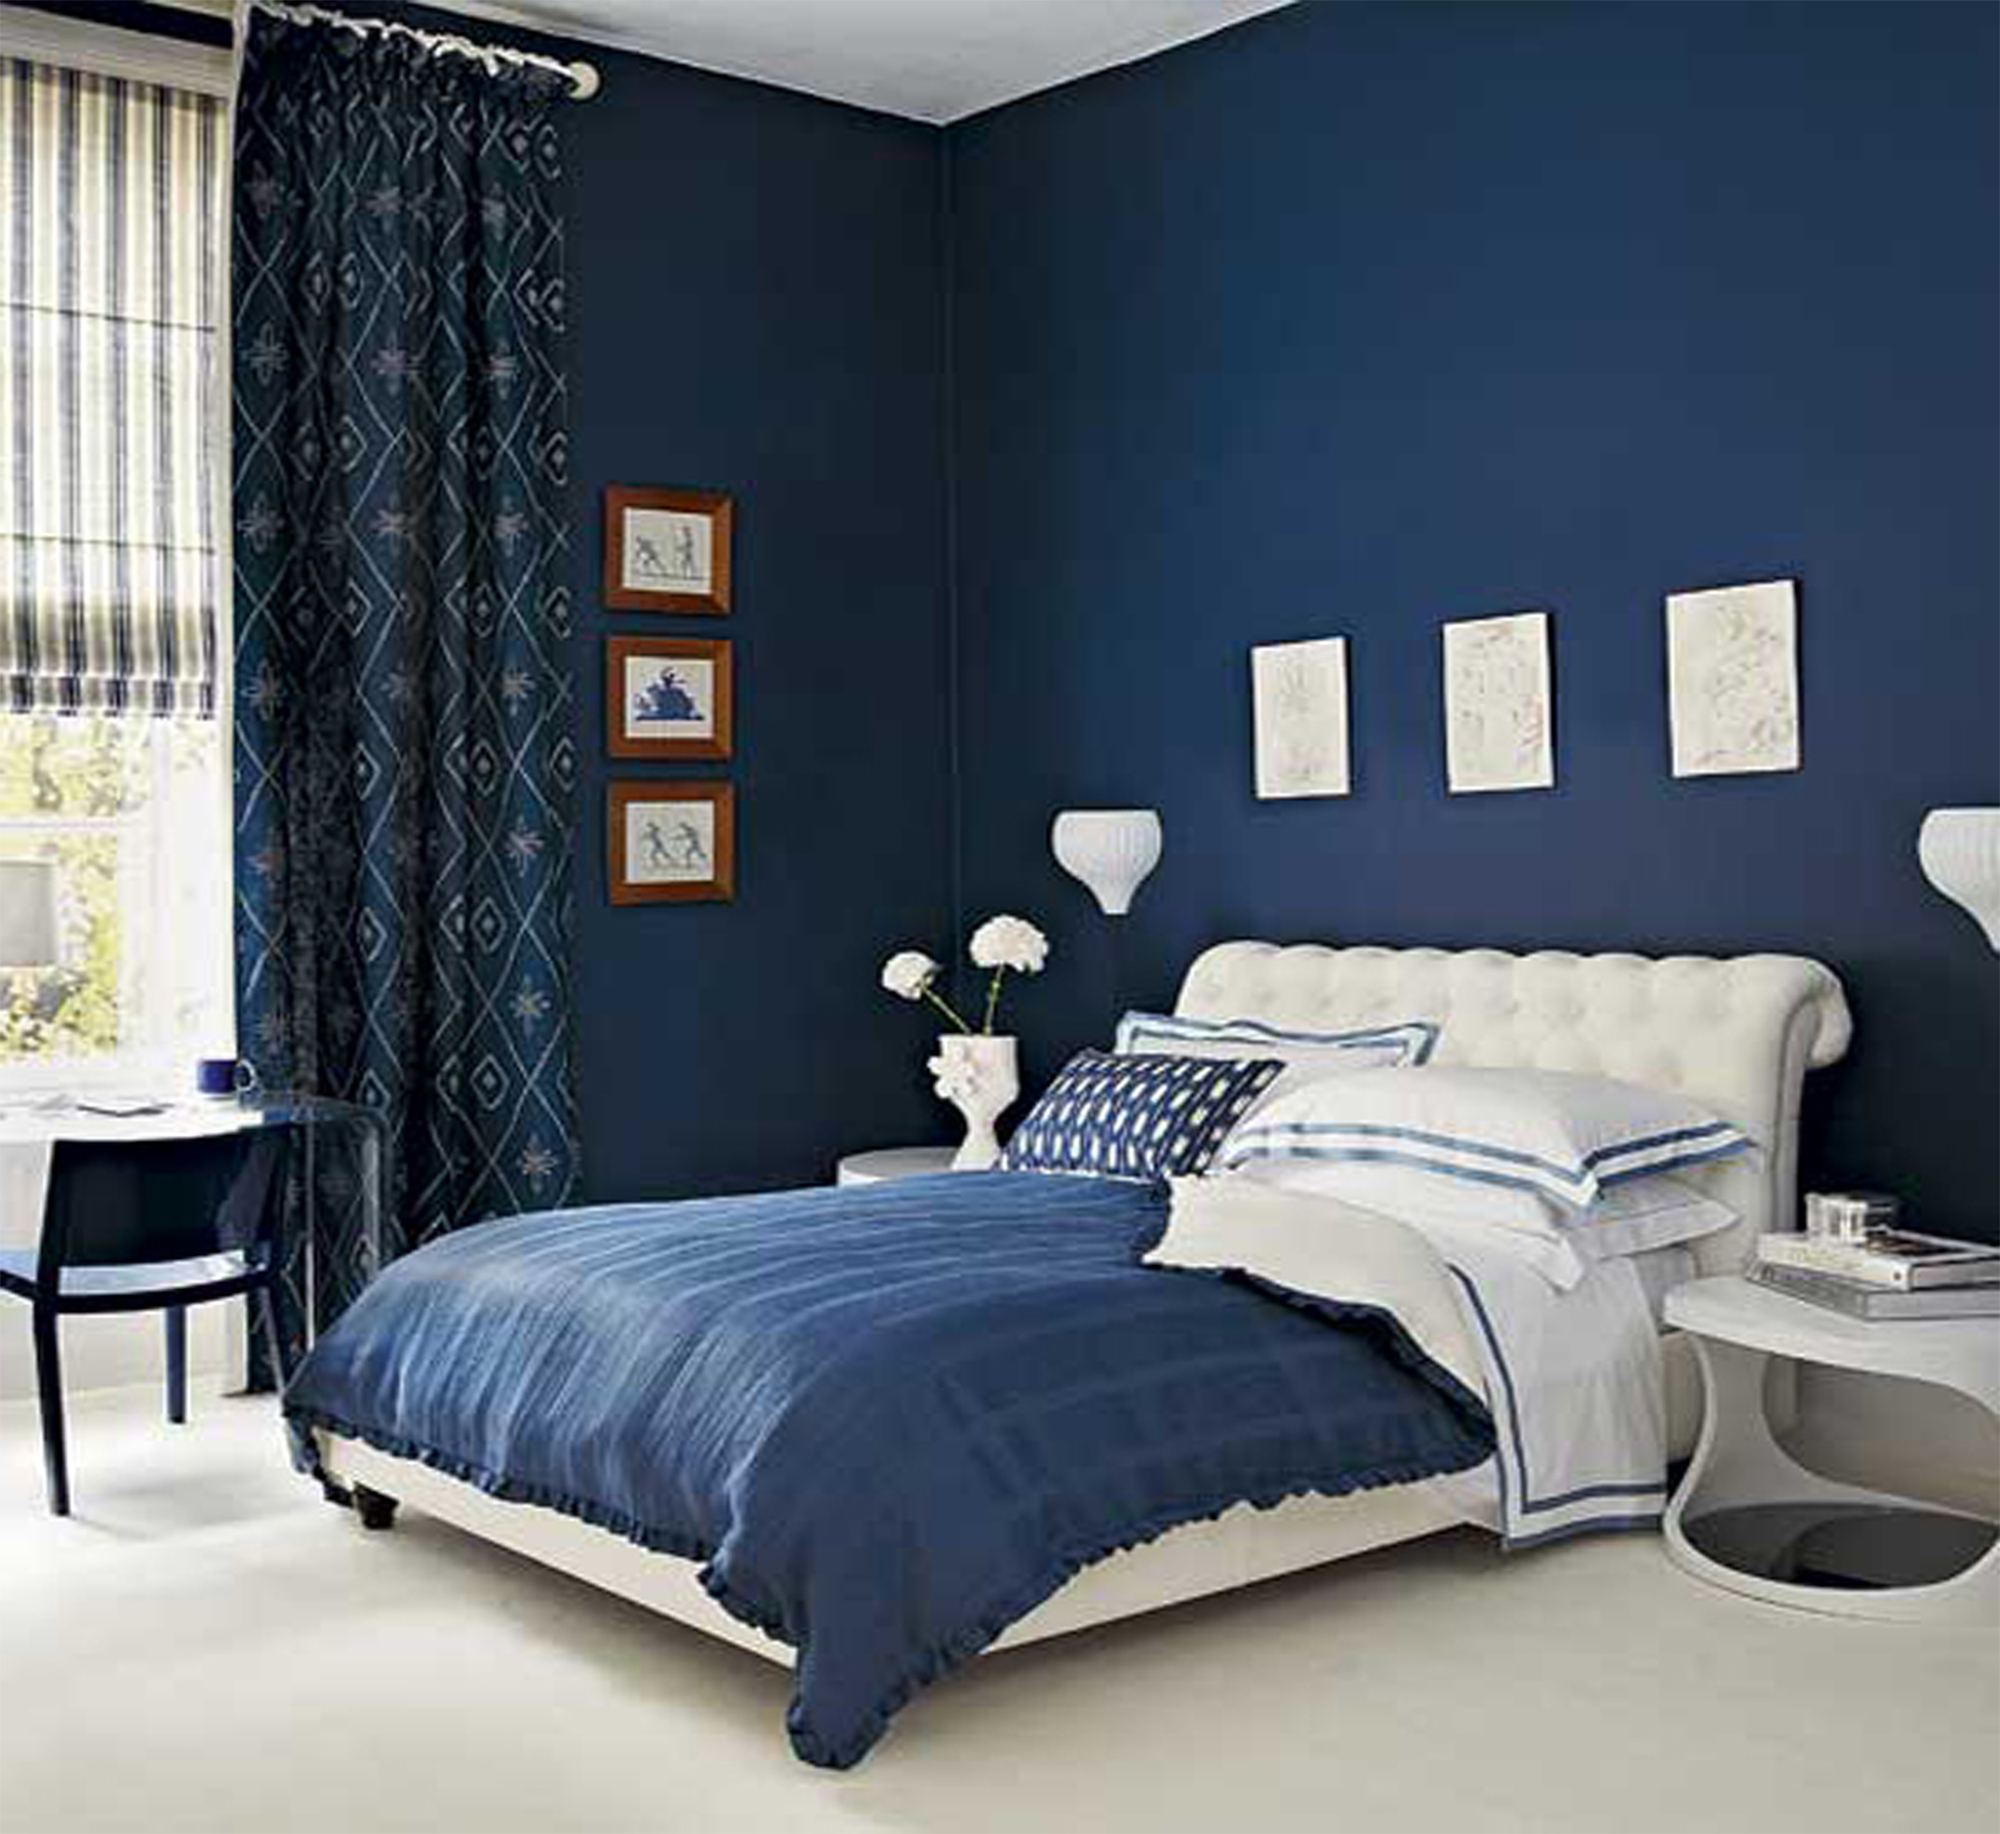 10 Amazing Black And Blue Bedroom Ideas amazing of navy blue and black bedroom ideas with blue be 3349 2024